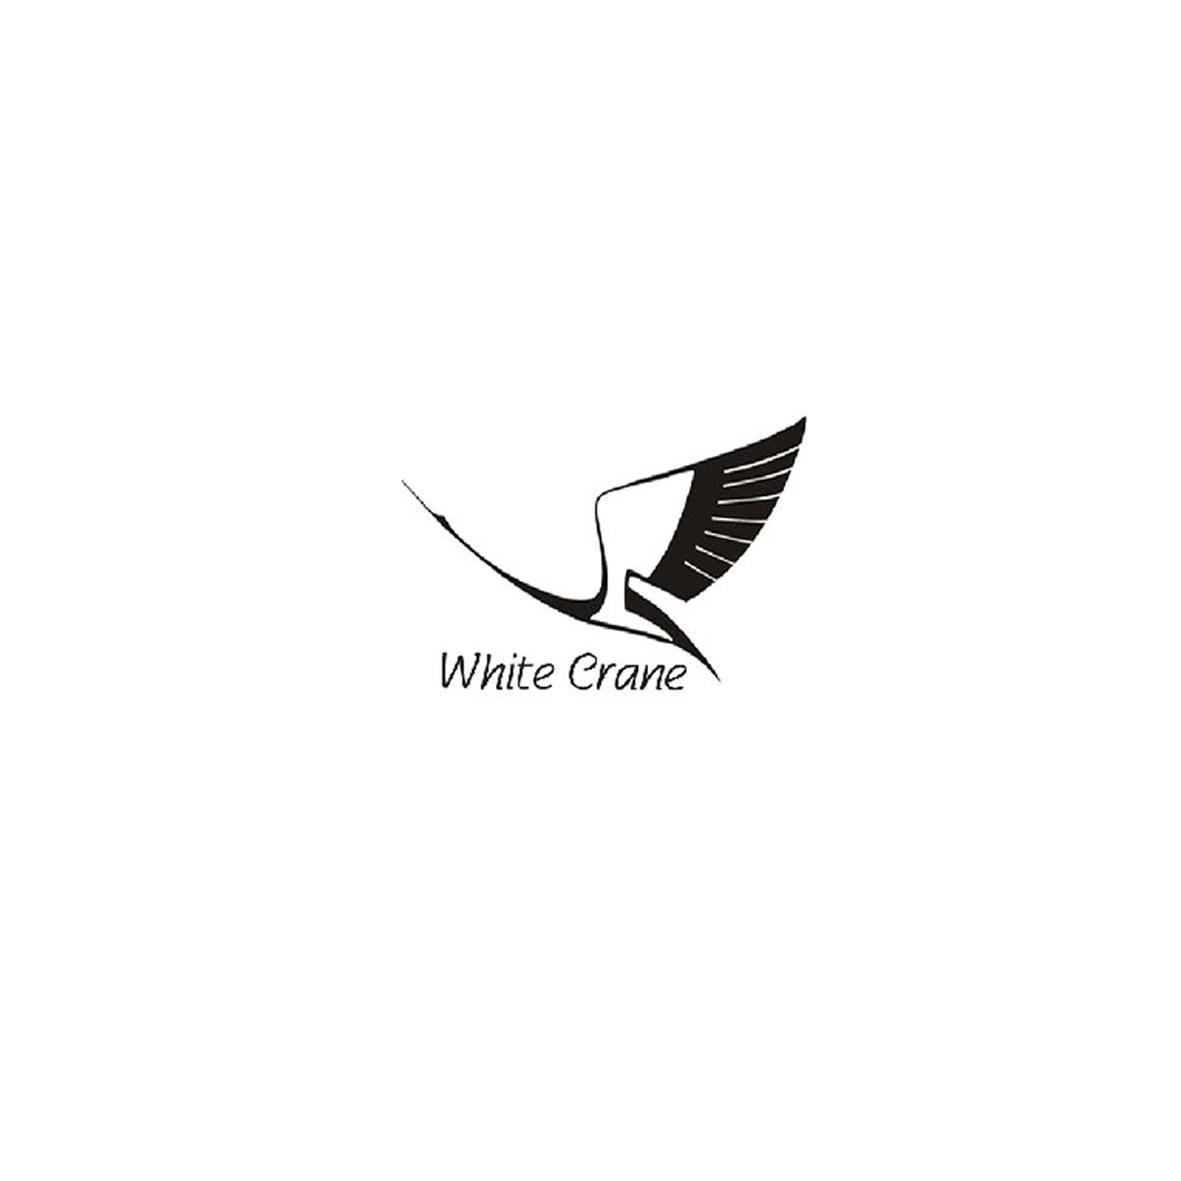 white crane 等待受理通知书发文 2014-01-03 13856554      皮革皮具